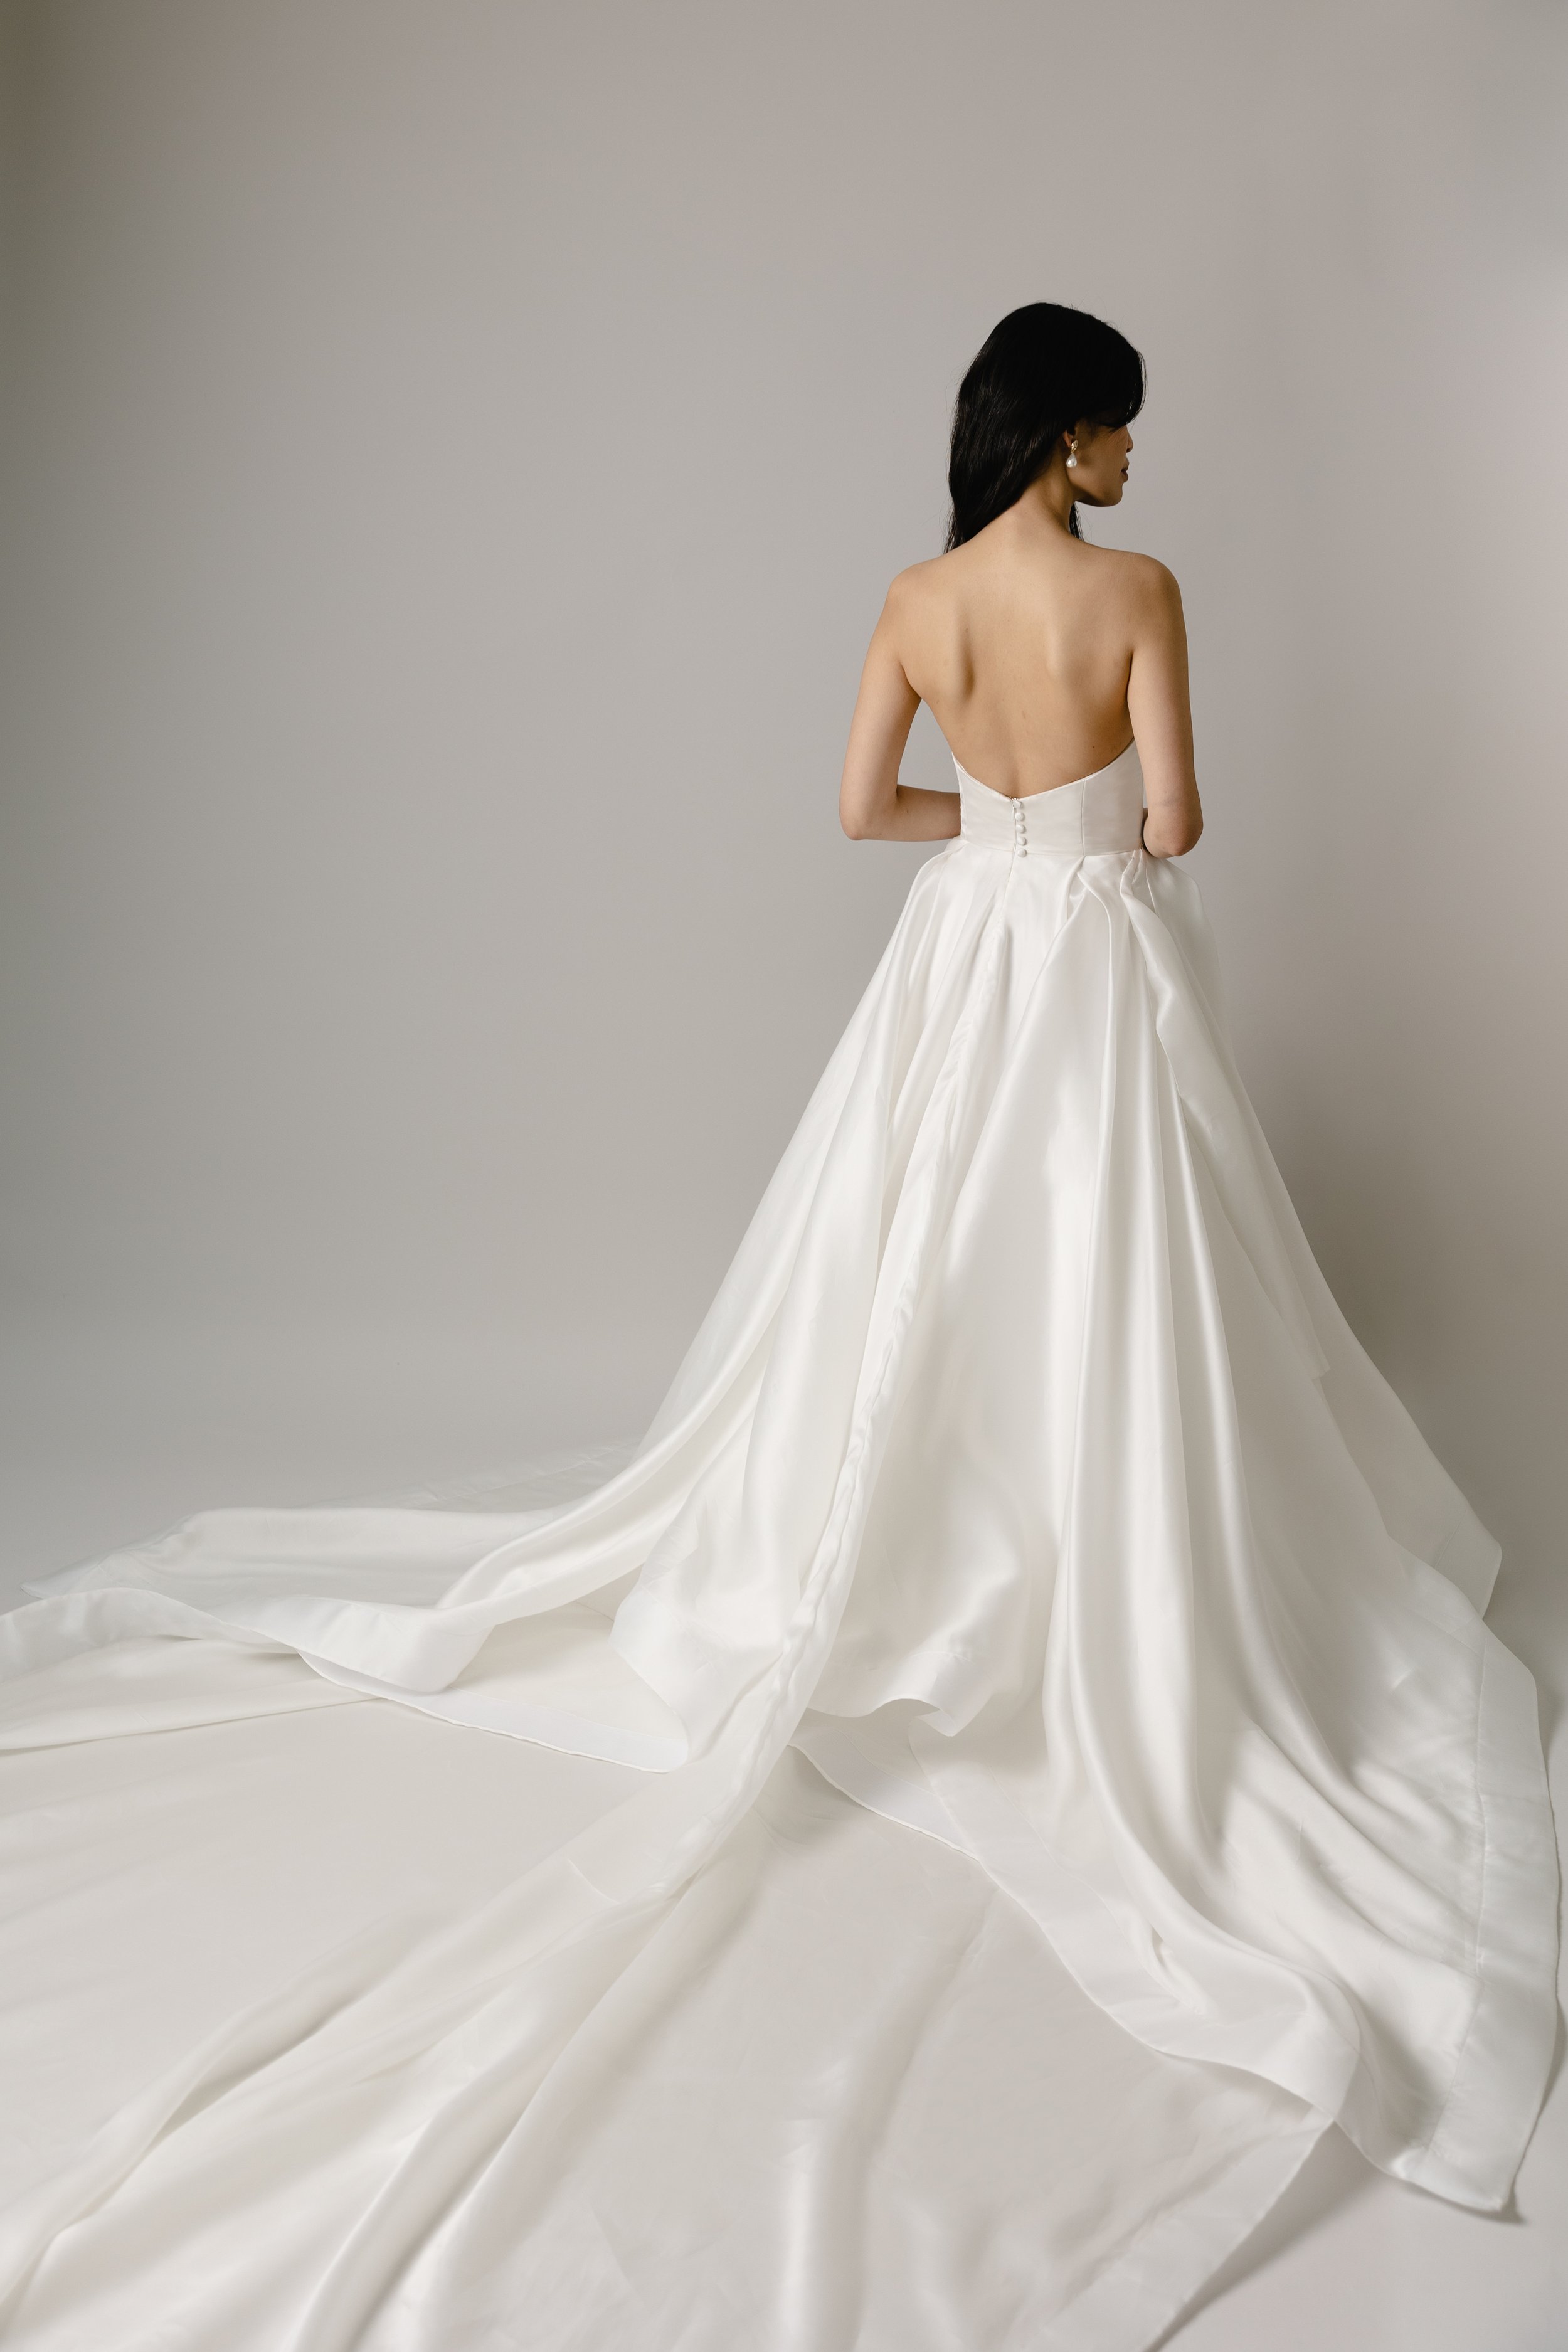 Aquarelle draped ballgown wedding dress4 web.jpg